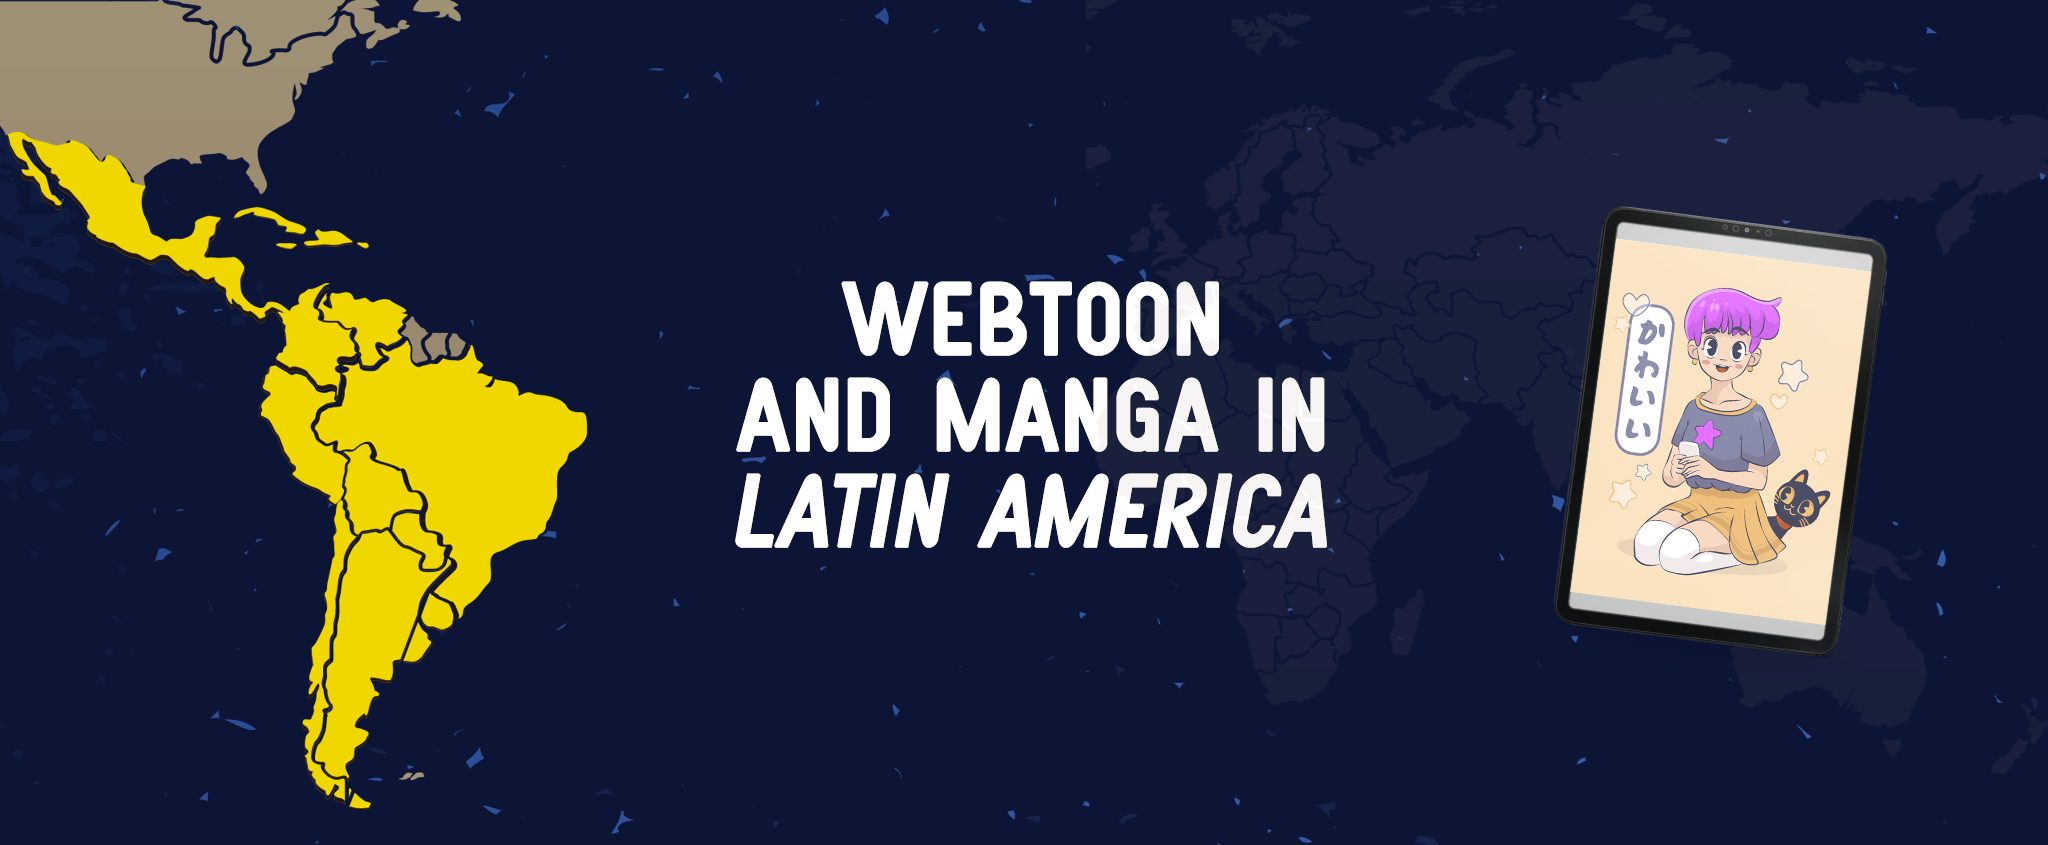 Webtoon and Manga in the Latin America